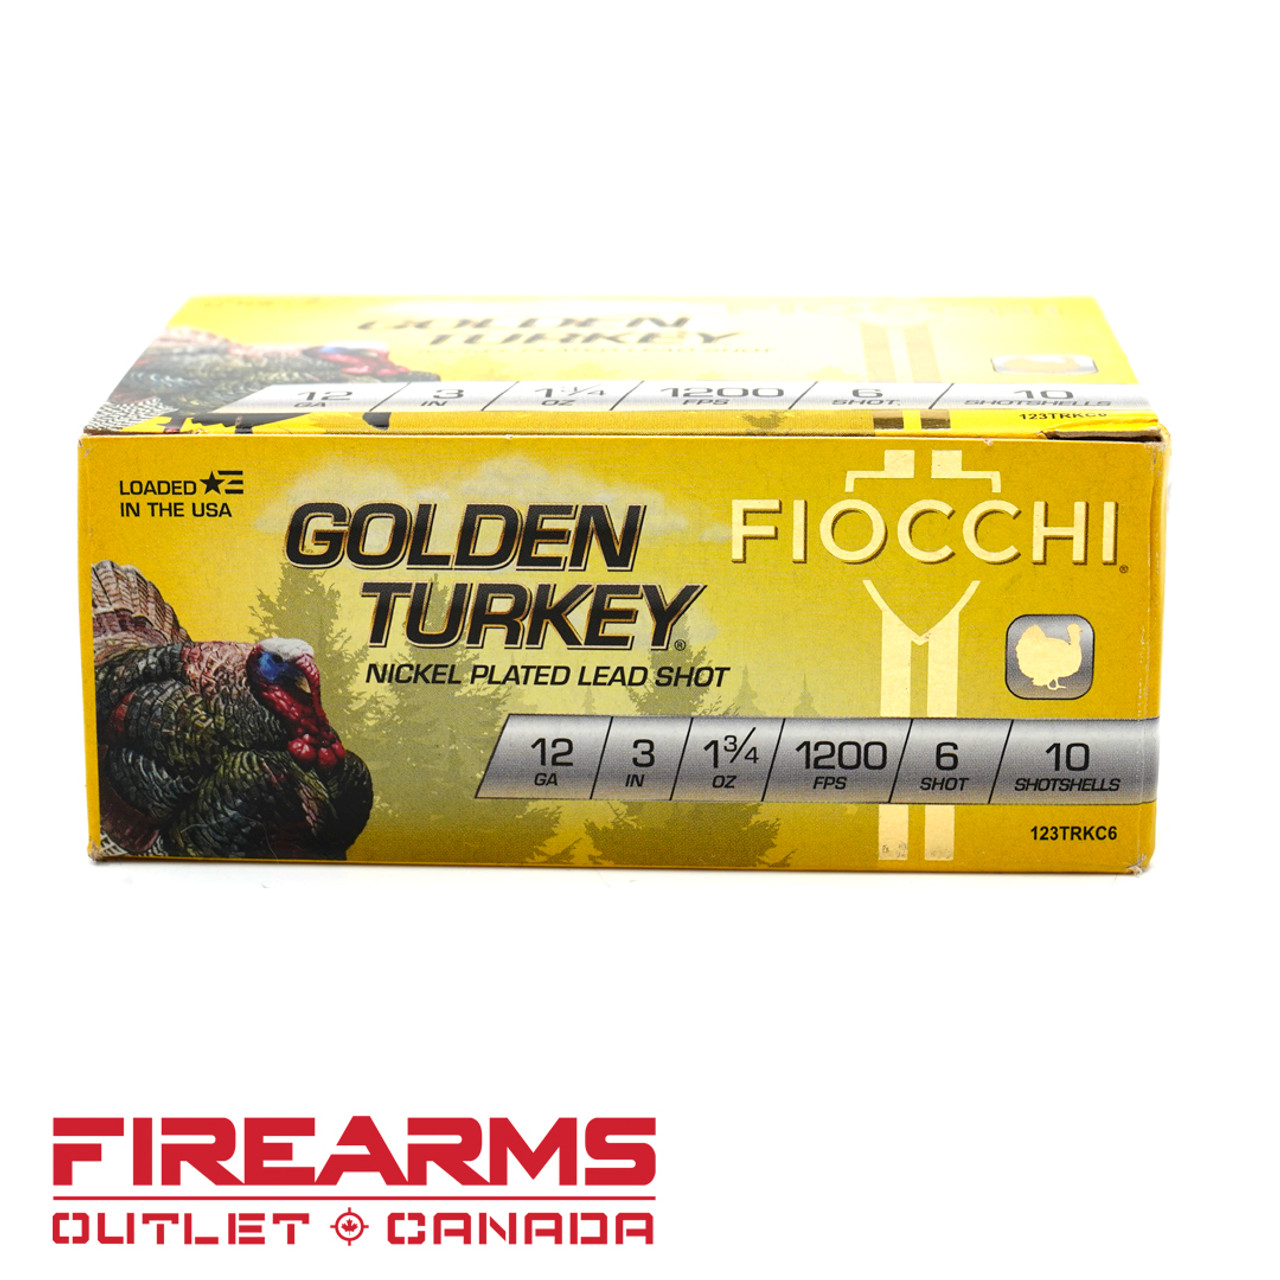 Fiocchi Golden Turkey - 12GA, 3", #6, Box of 10 [123TRKC6]